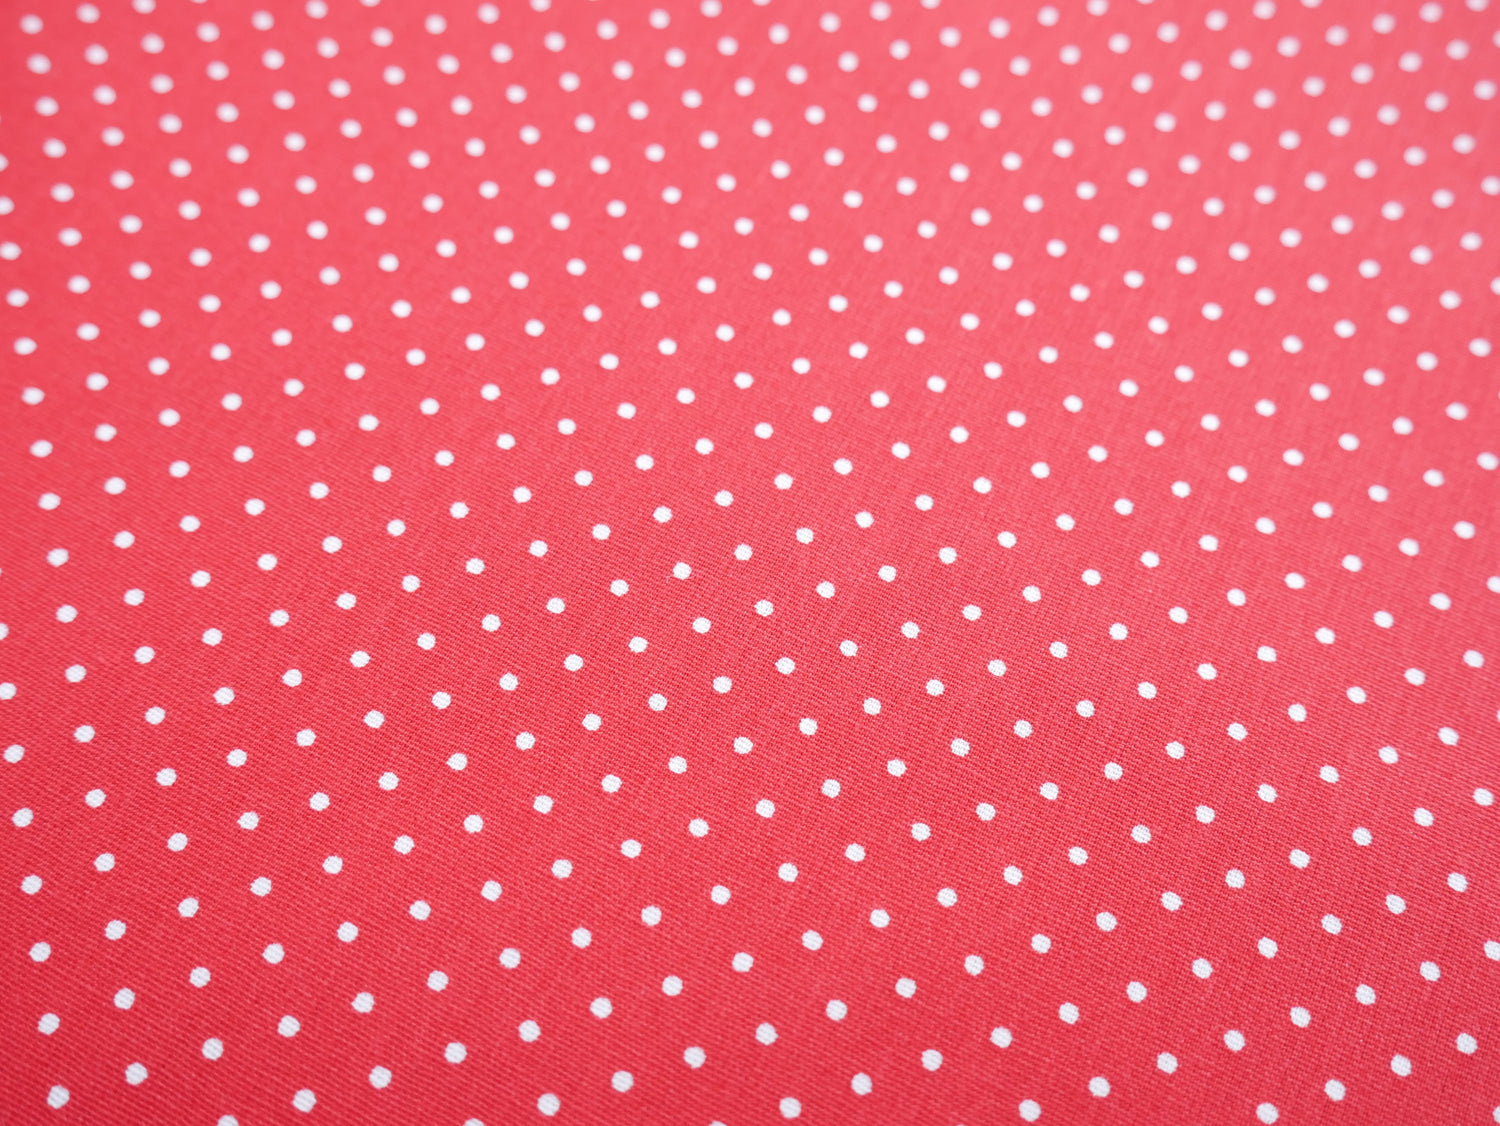 Pin-Spot Printed Cotton, Red £8.50 p/m-Fabric-Flying Bobbins Haberdashery